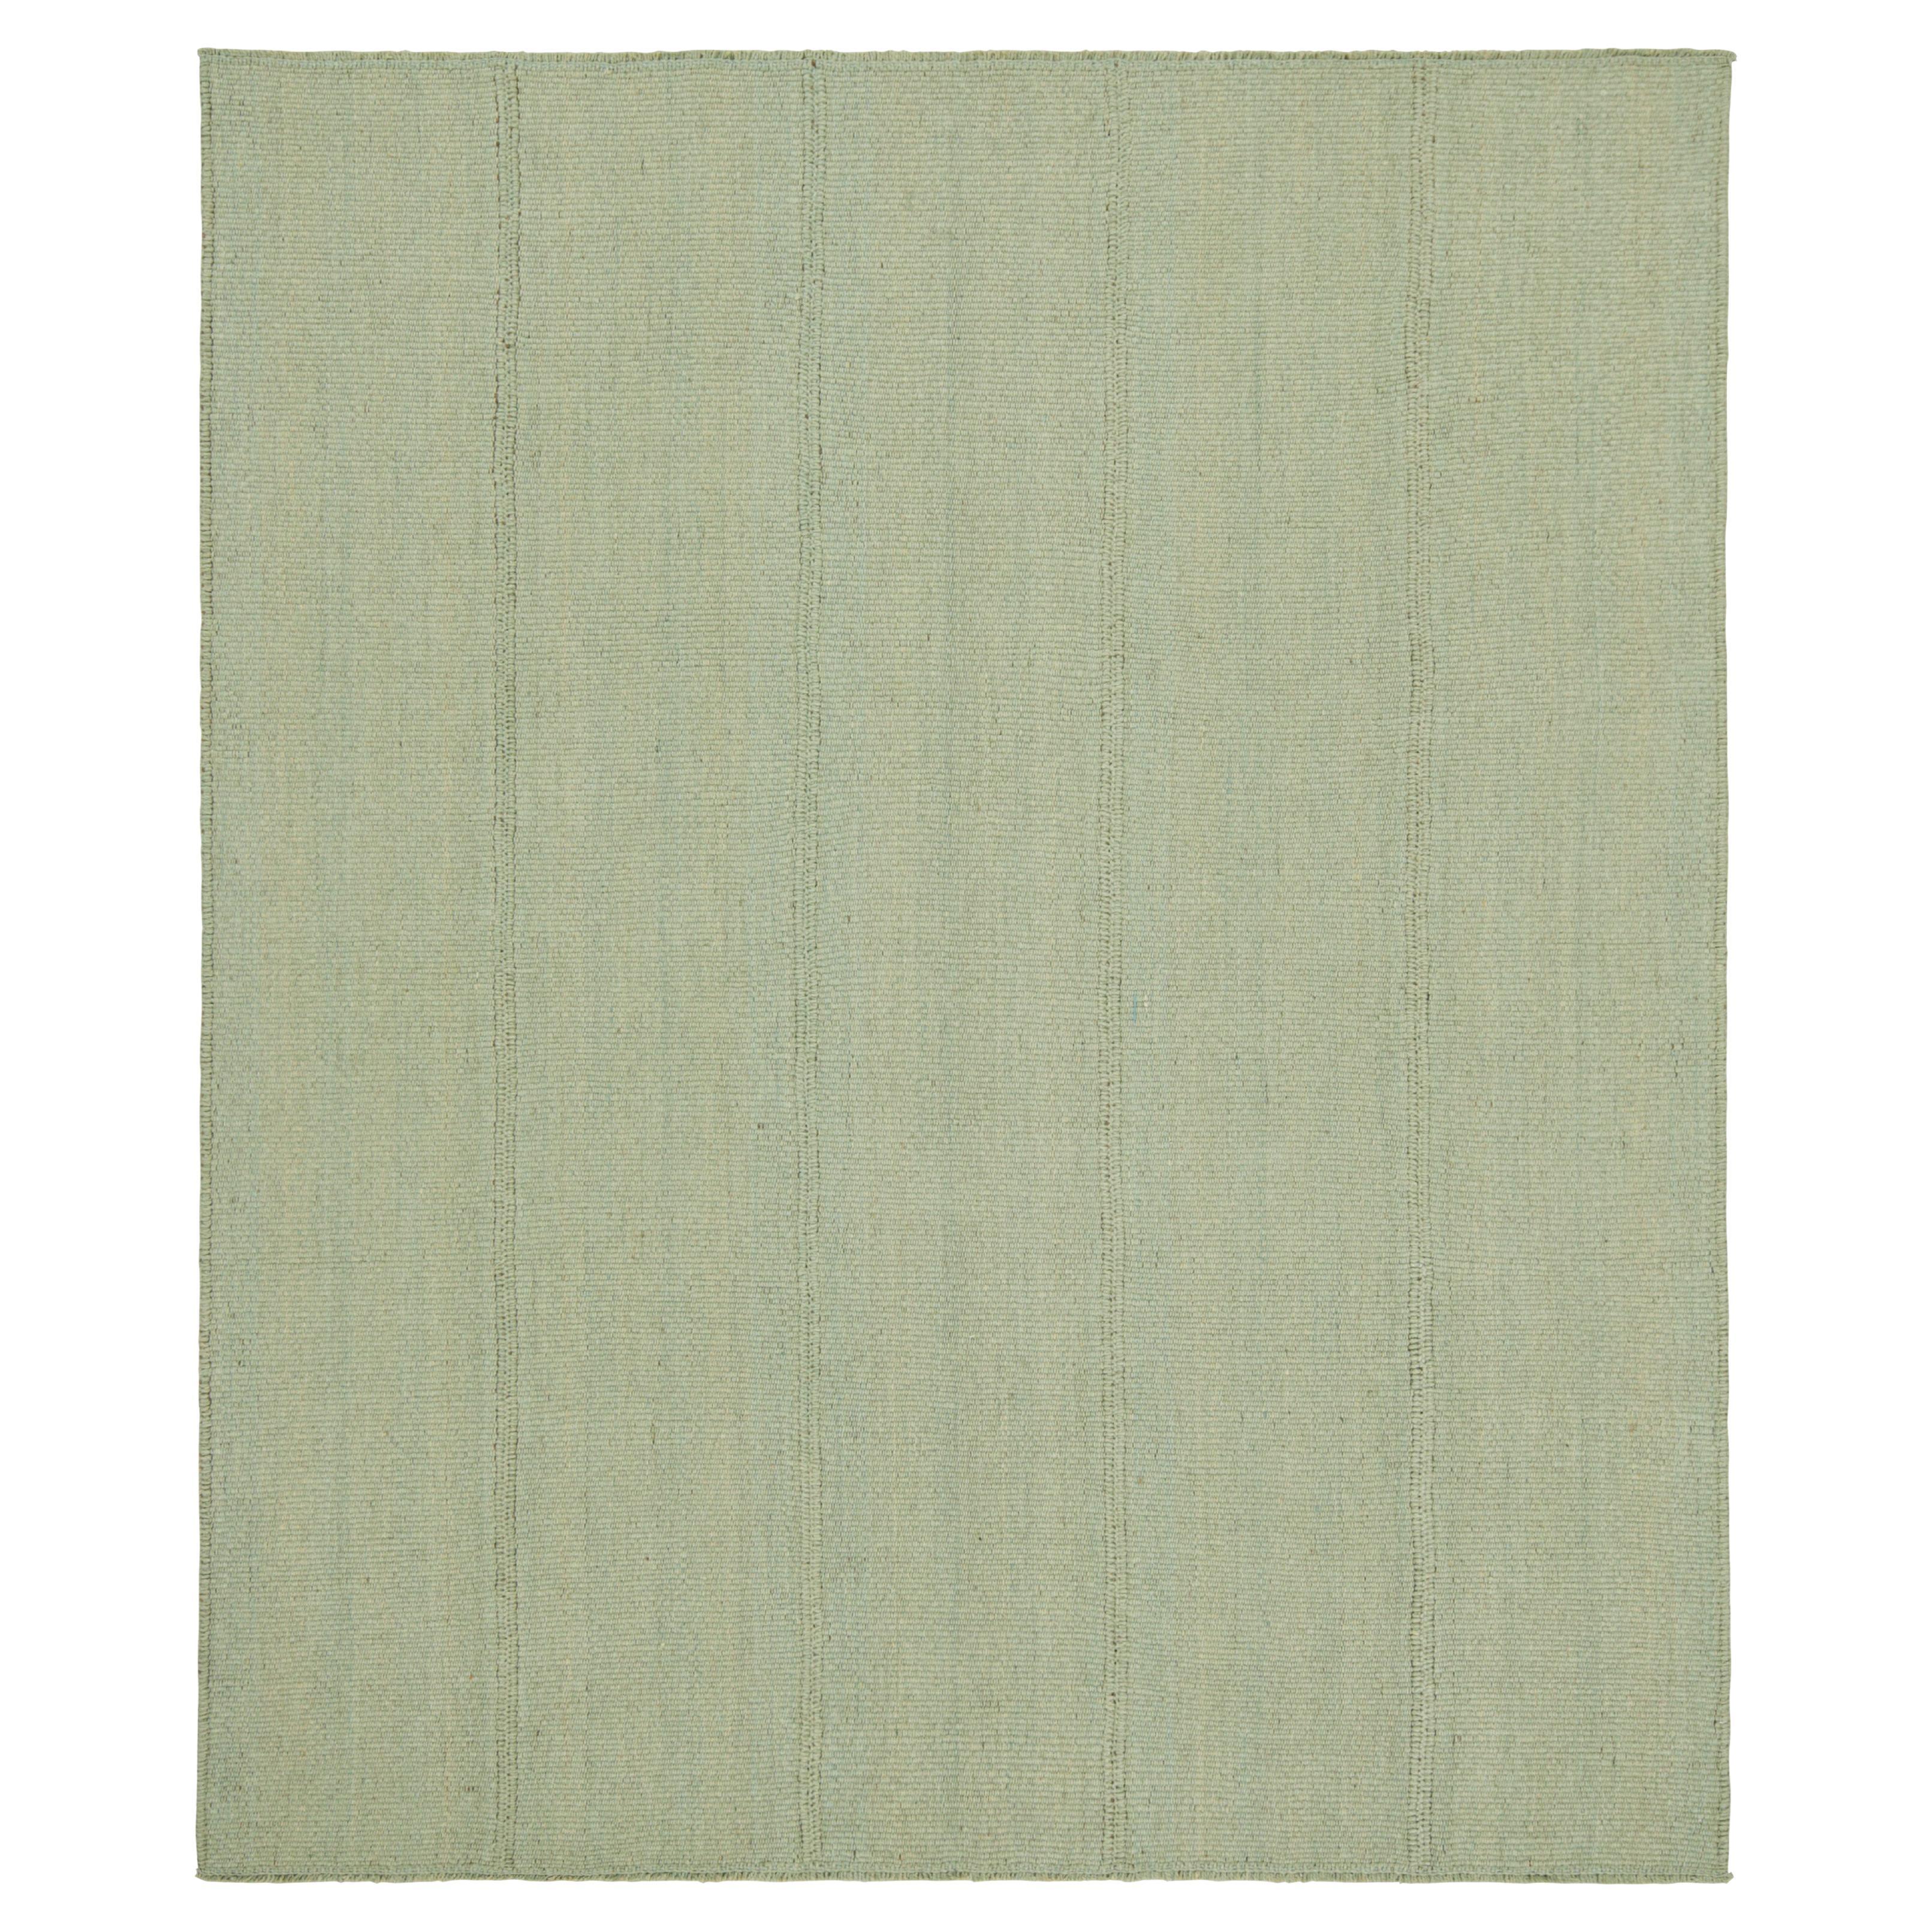 Rug & Kilim’s Contemporary Kilim in Seafoam Green and Blue Textural Stripes